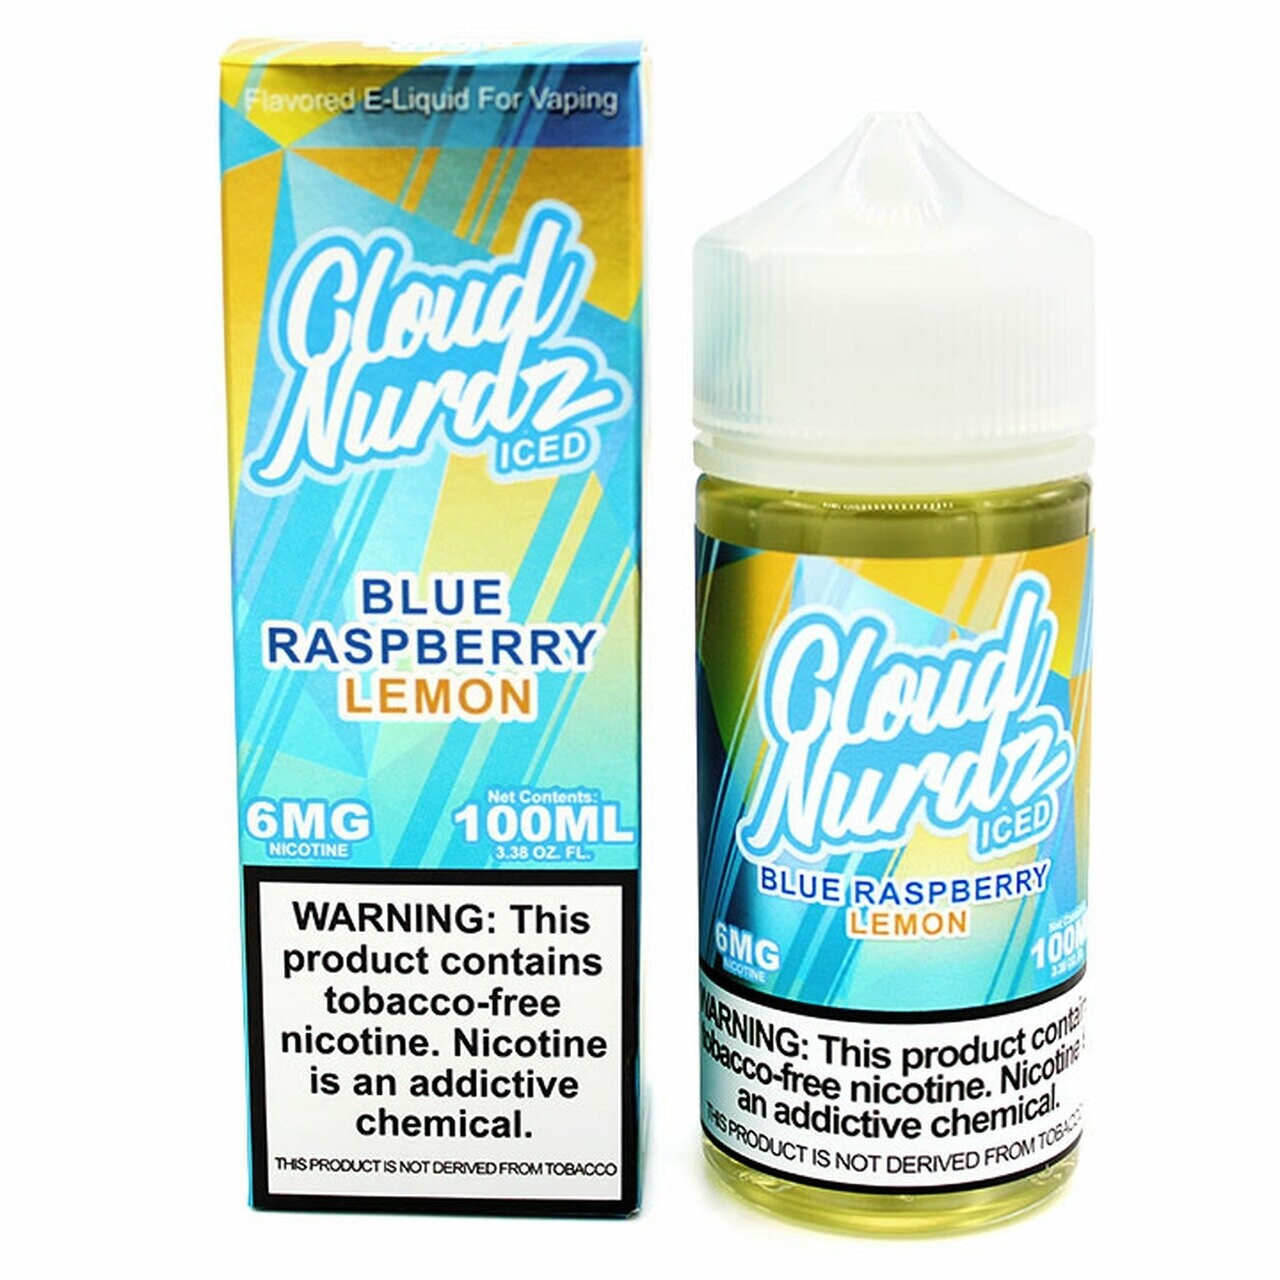 Cloud Nurdz Iced Blue Raspberry Lemon 6mg 100ml